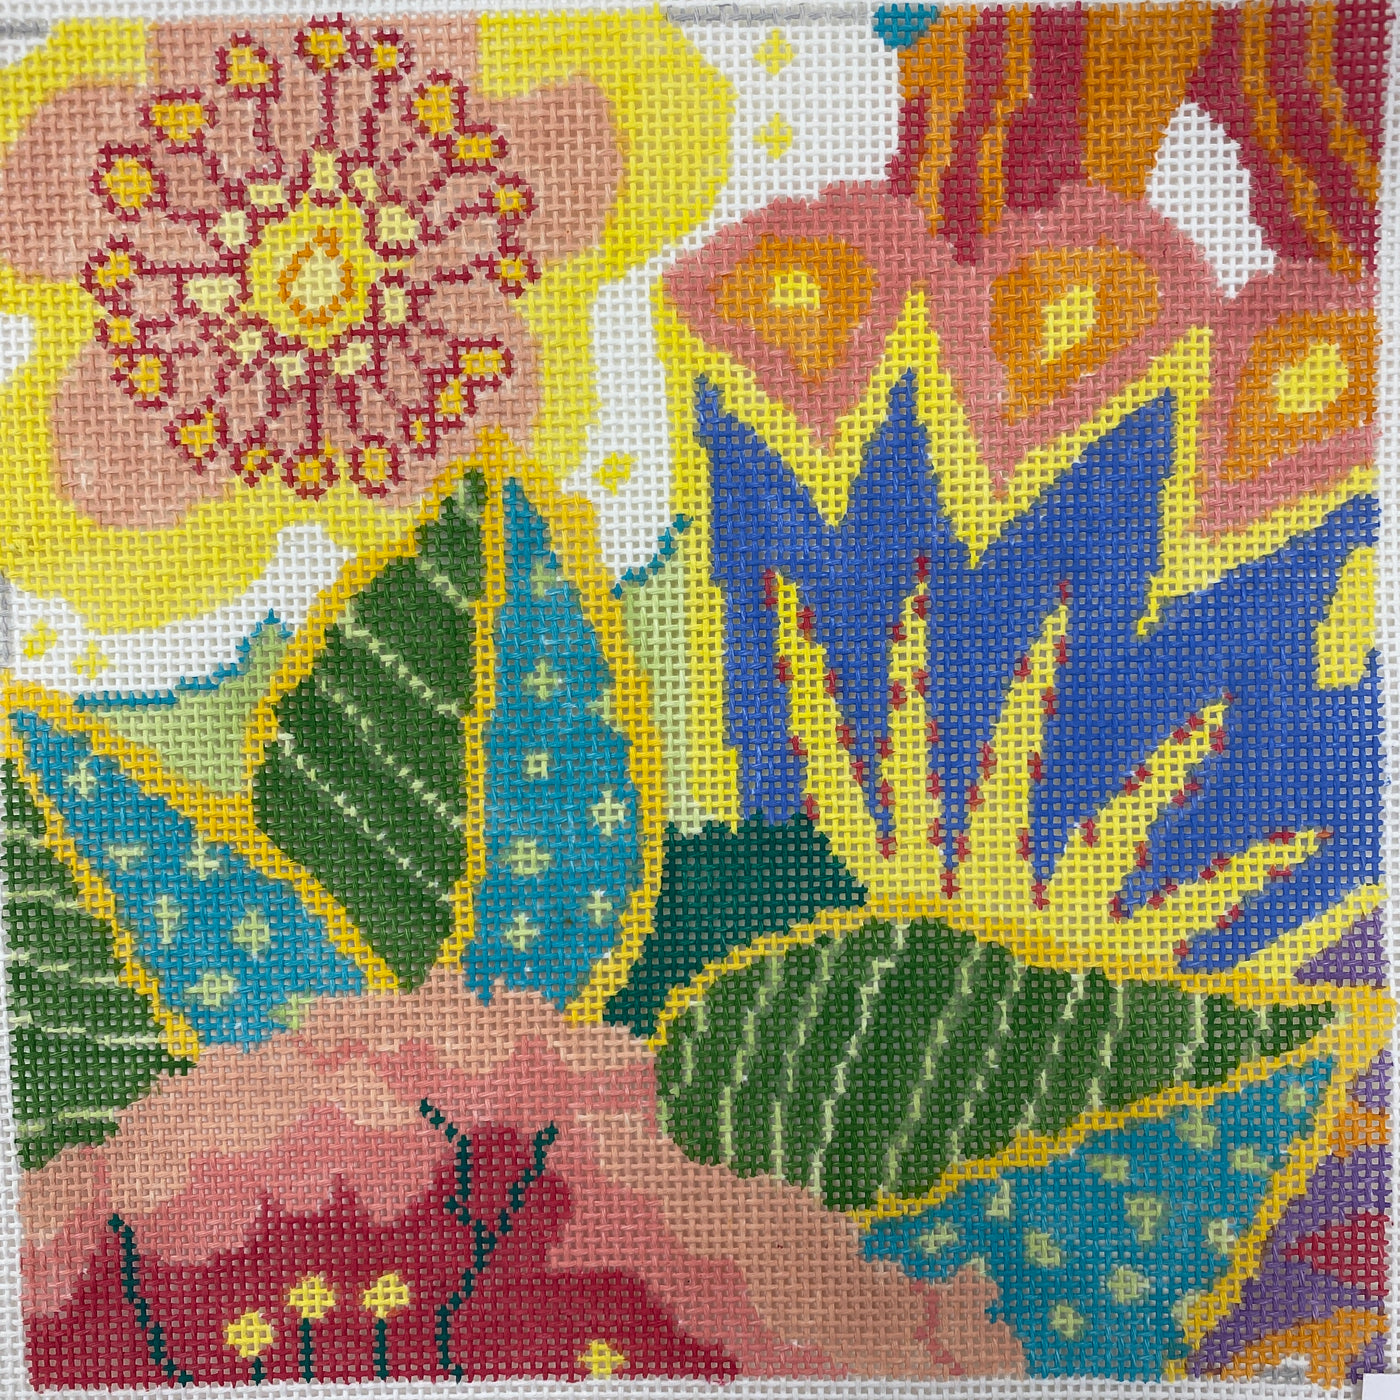 Tropical Garden - Medium #2 Needlepoint Canvas